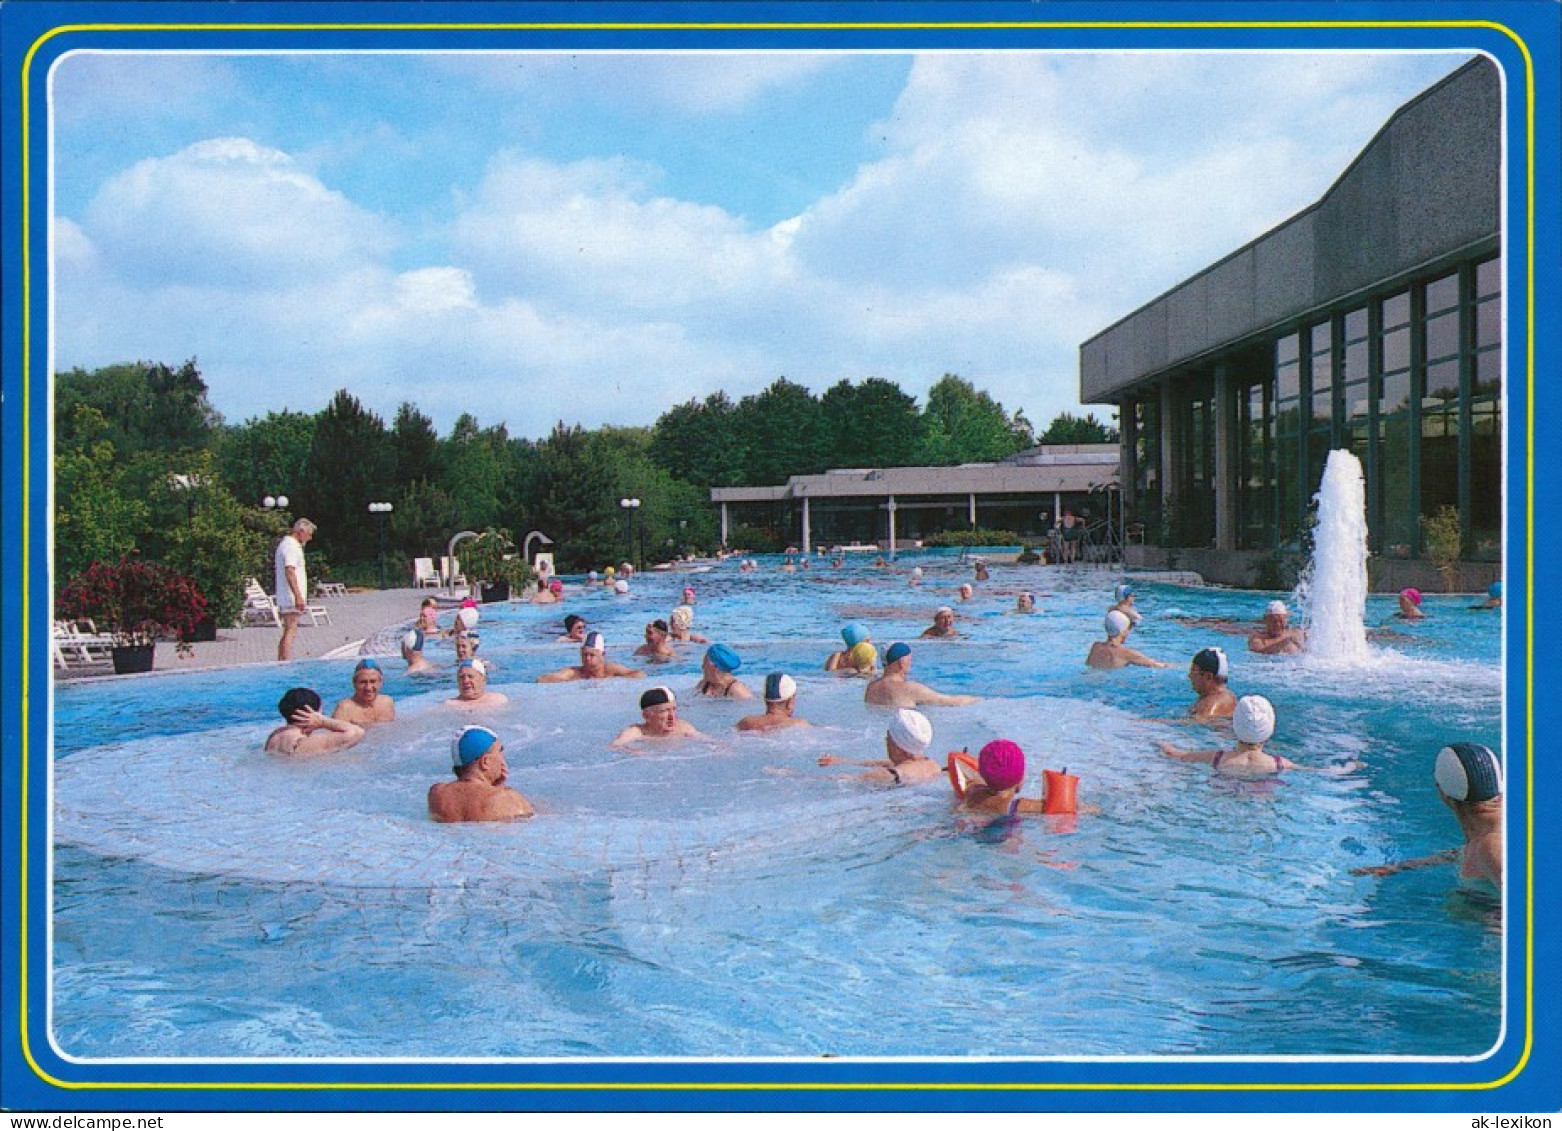 Ansichtskarte Bad Bevensen Thermal-Sole-Bad 1995 - Bad Bevensen